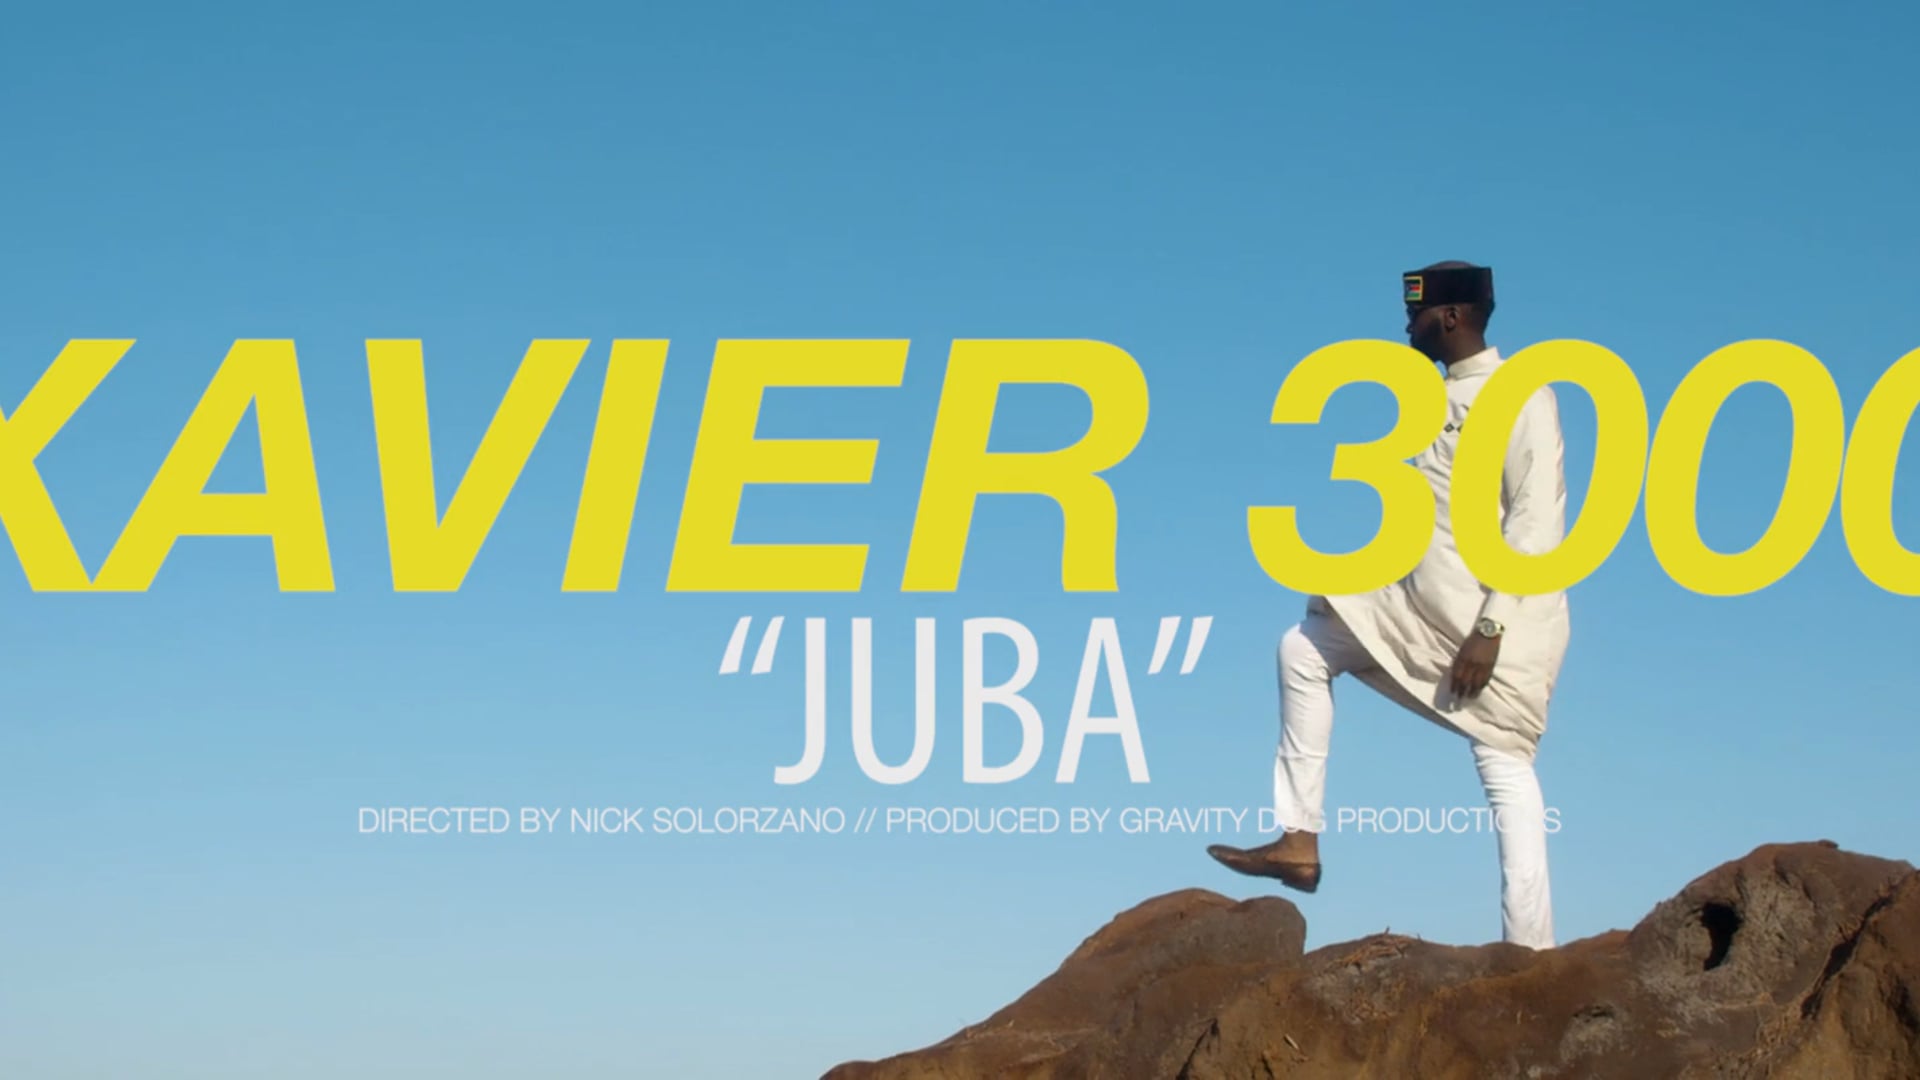 Xavier 3000 - "Juba"